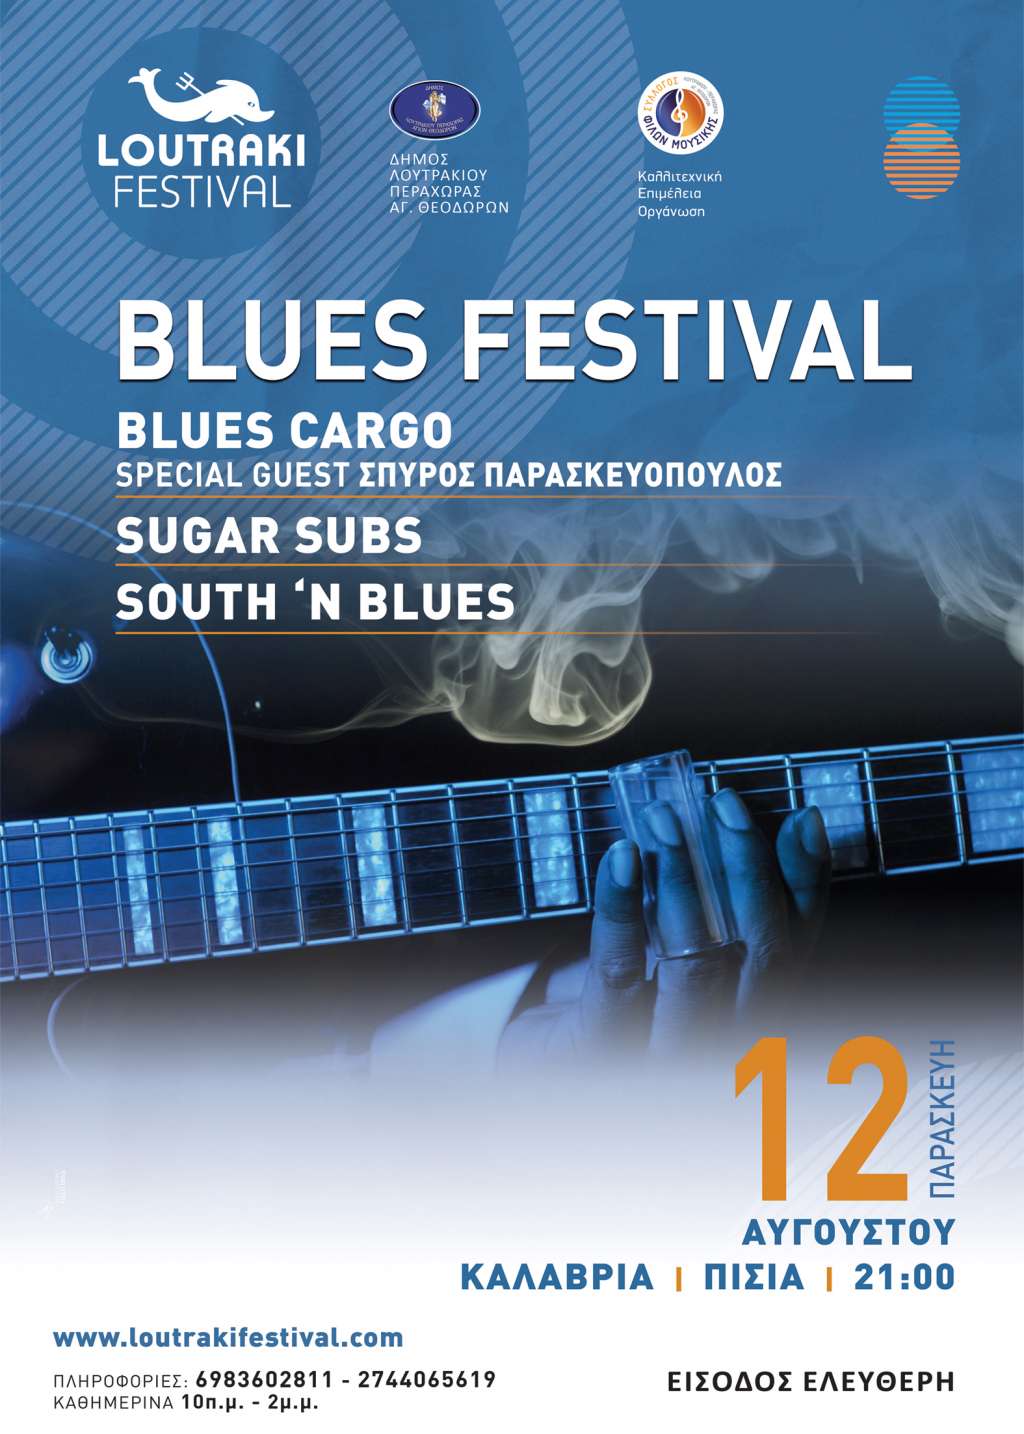 Loutraki Festival: Στις 12 Αυγούστου το Blues Festival - ΚΟΡΙΝΘΙΑ